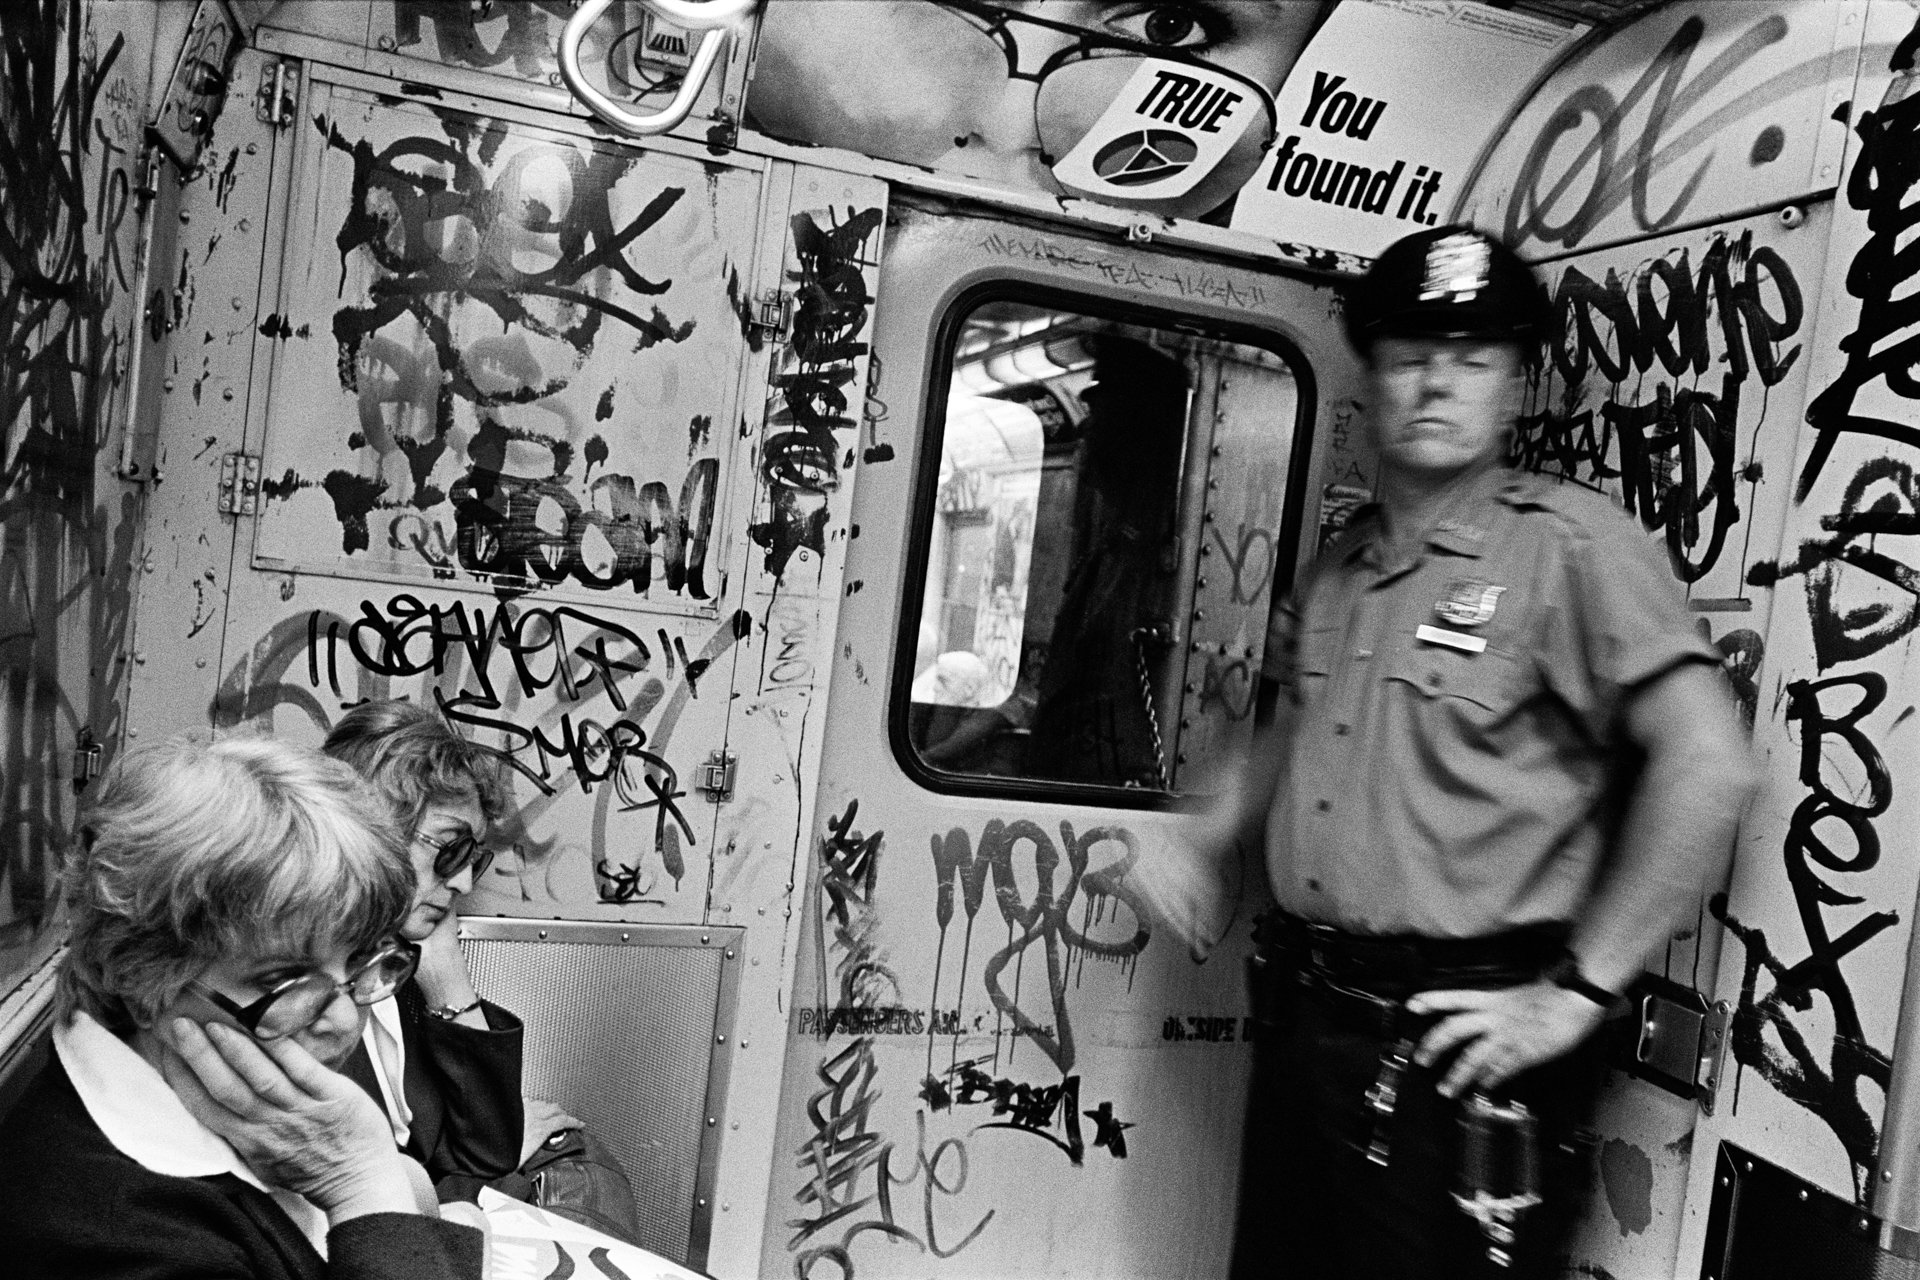 True You Found It, Subway, NYC, 1983